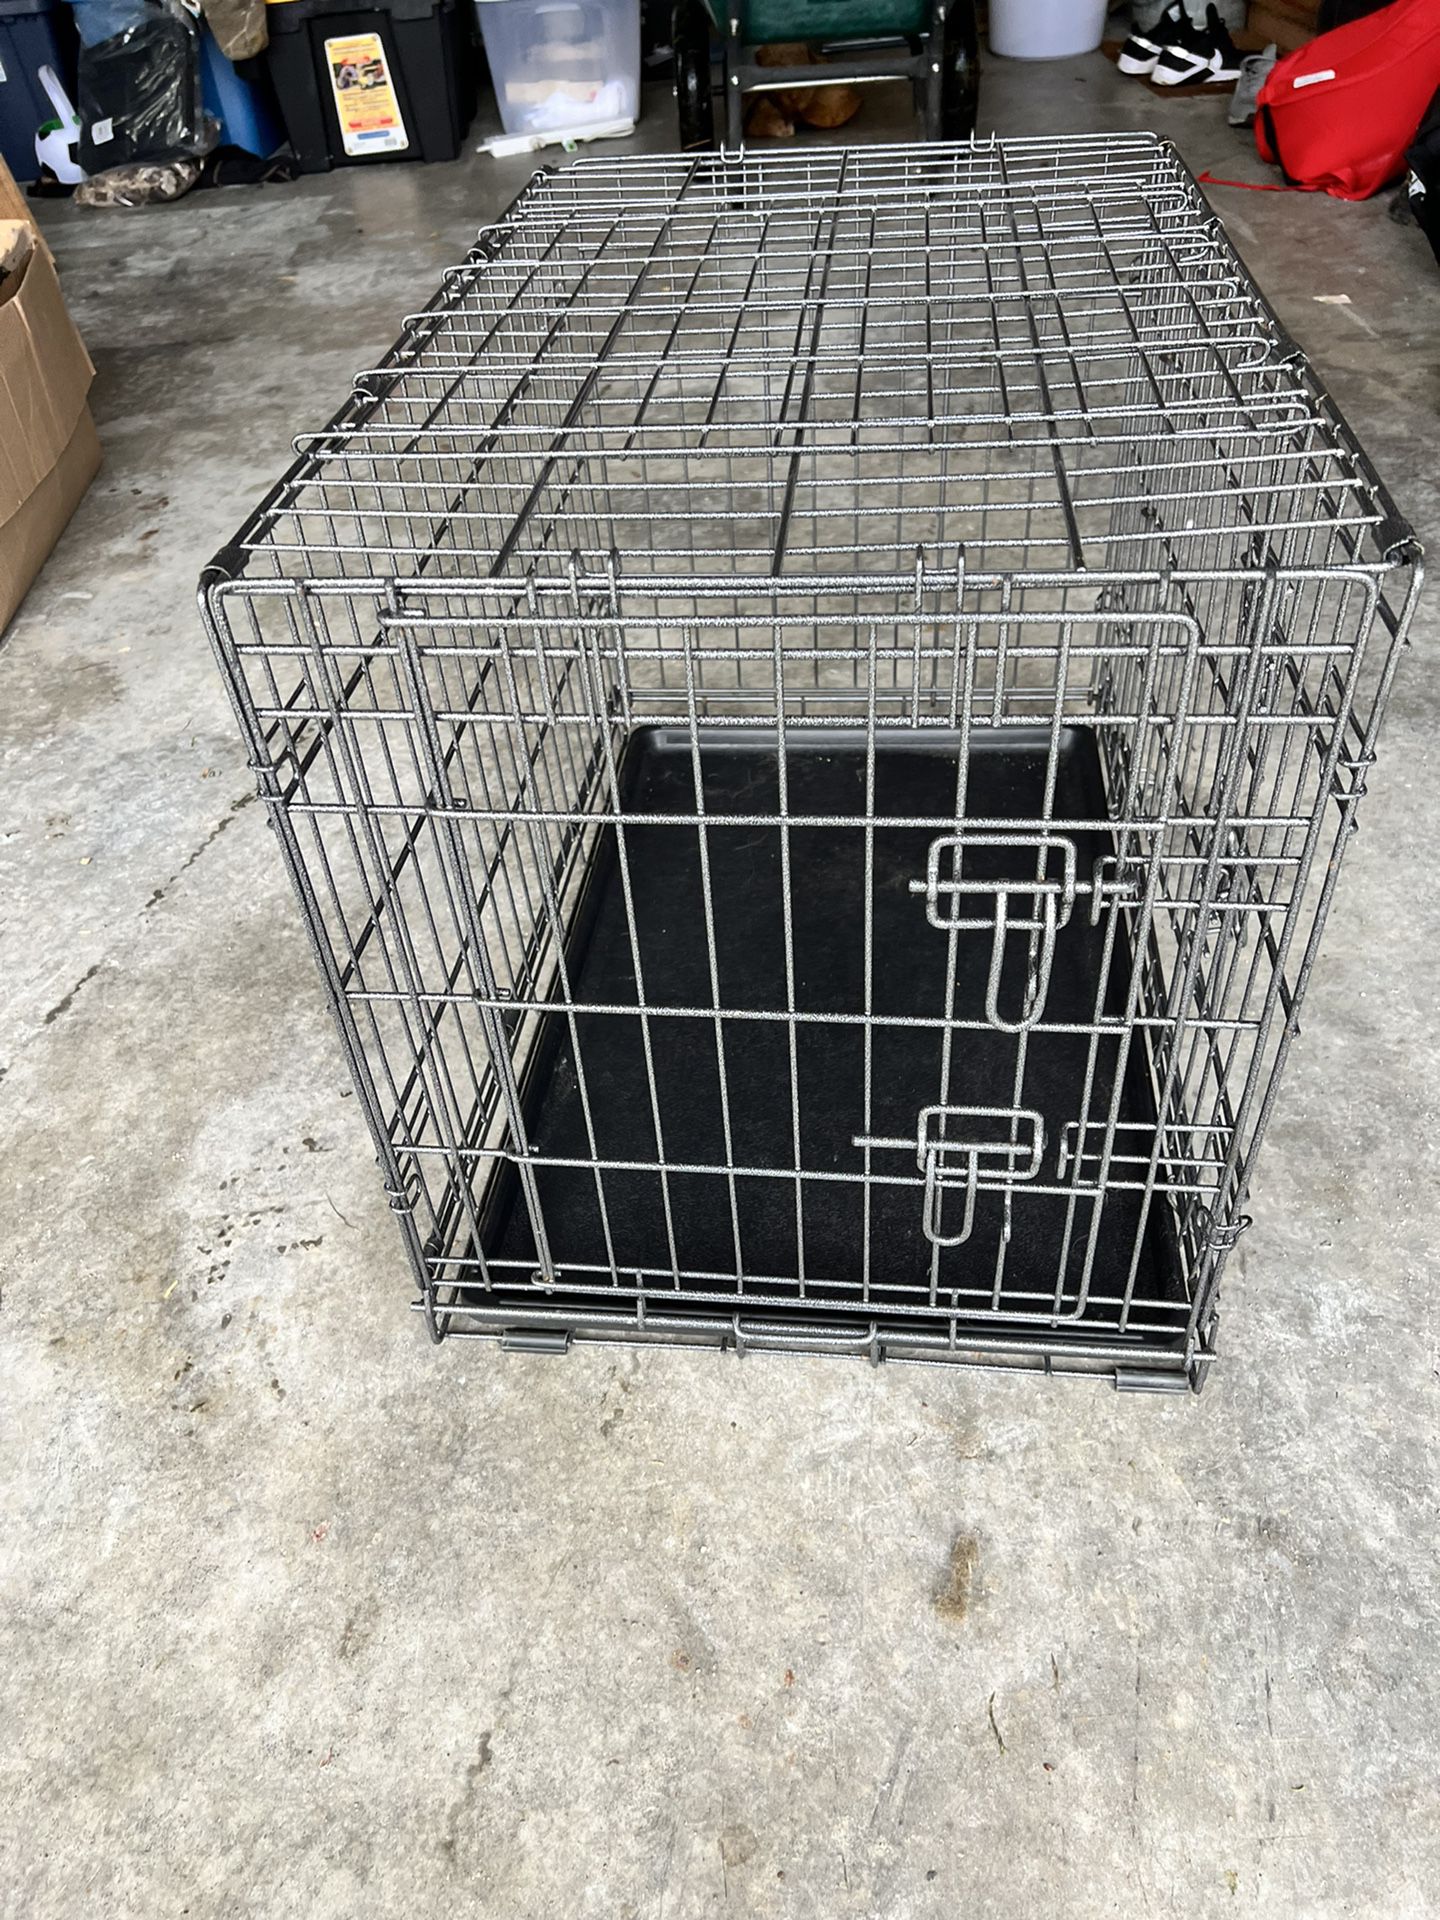 Medium Size Dog Crate 